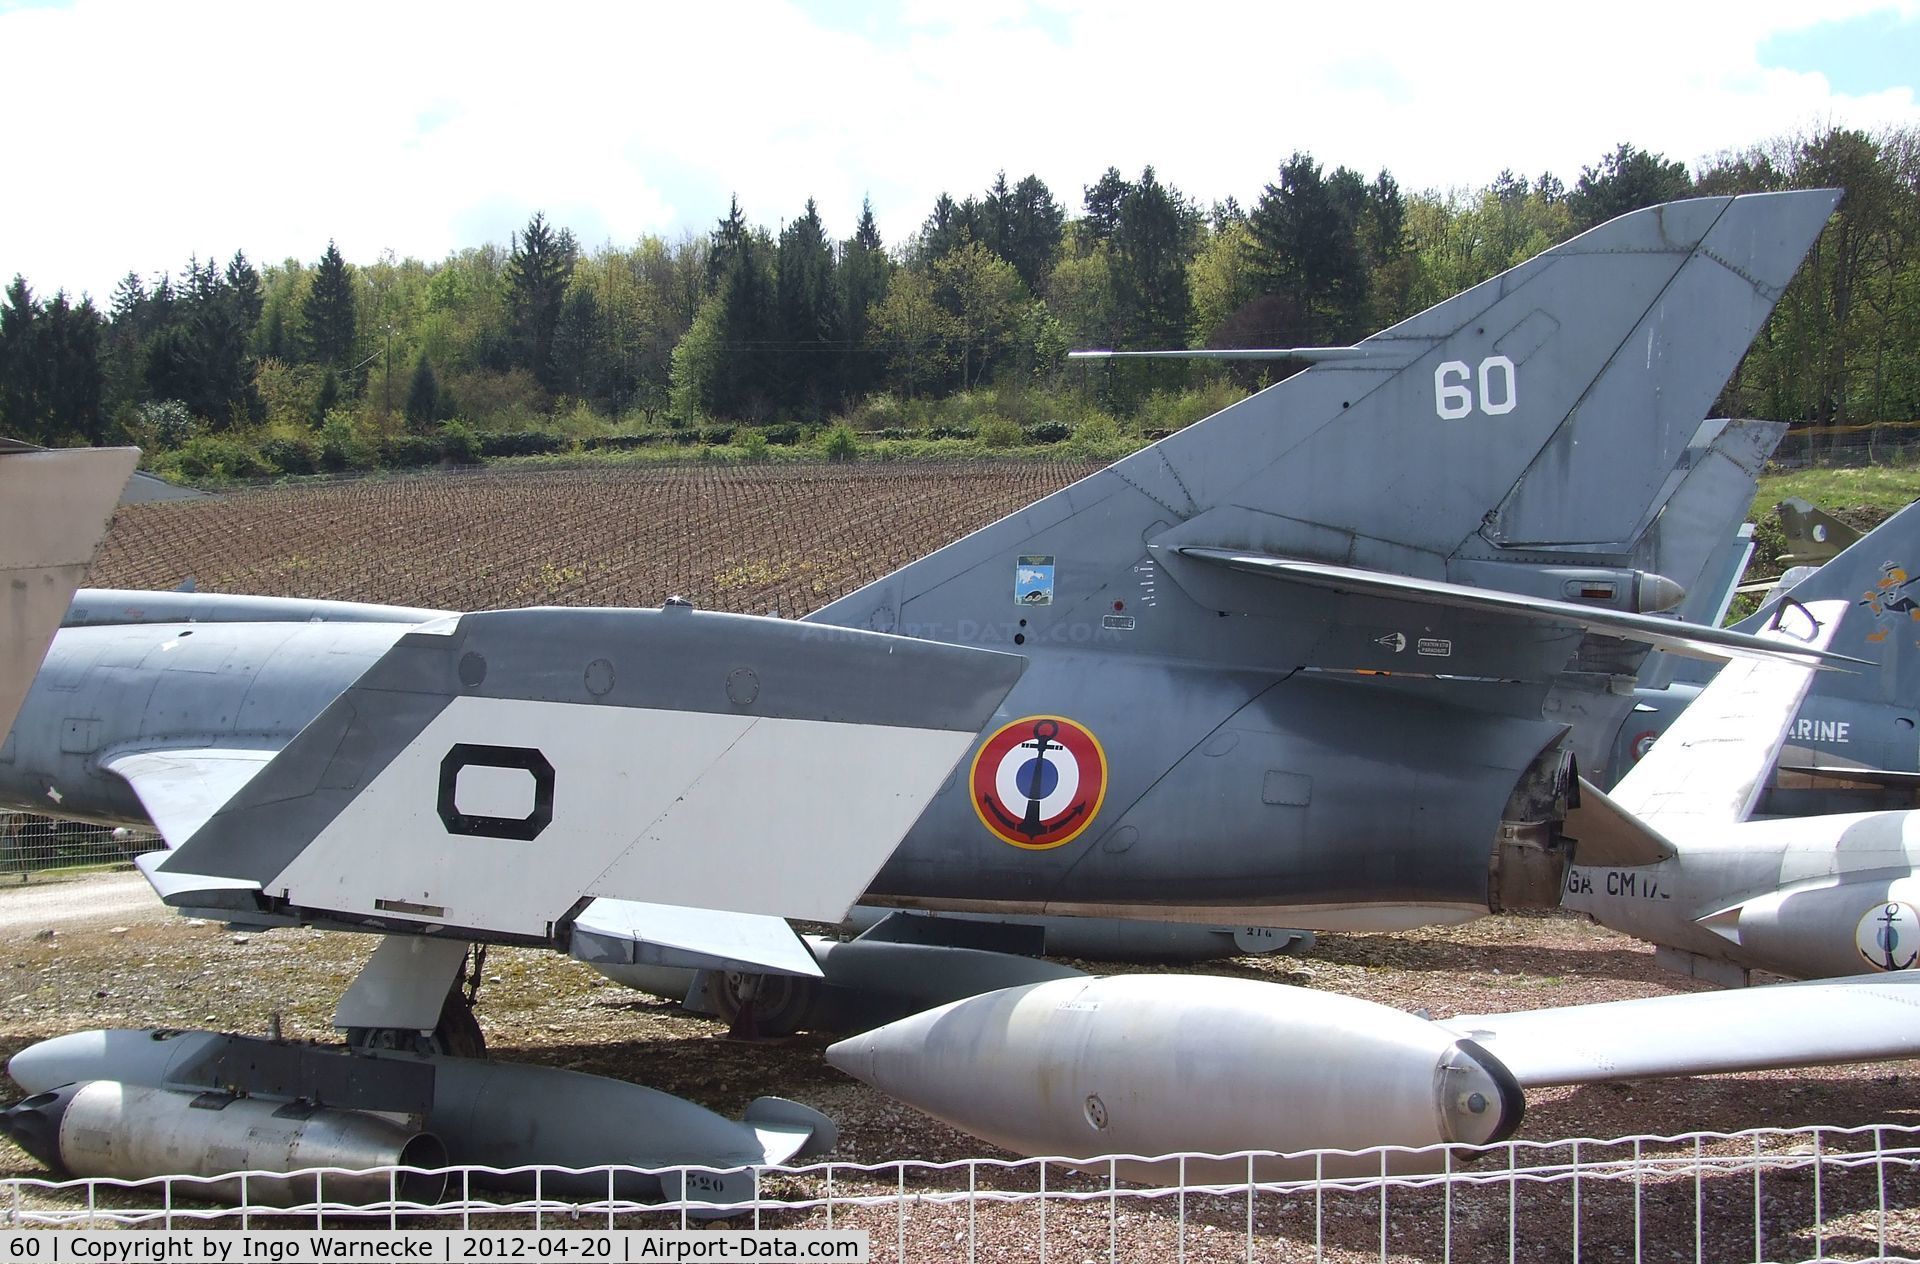 60, Dassault Etendard IV.M C/N 21, Dassault Etendard IV M at the Musee de l'Aviation du Chateau, Savigny-les-Beaune